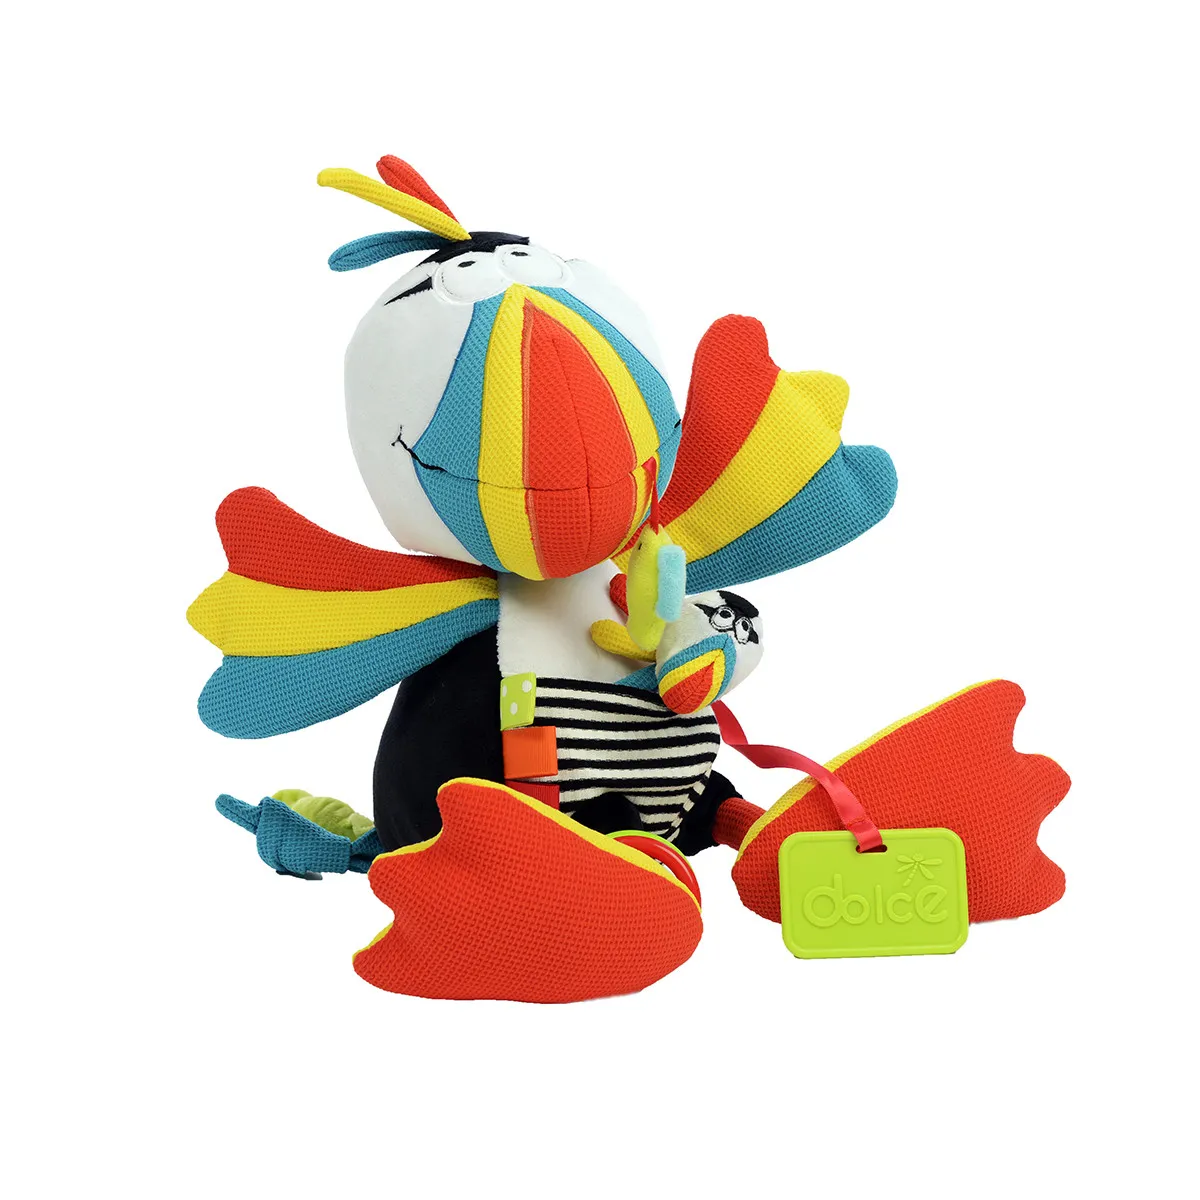 Dolce edukativna igračka - Papagaj 20cm